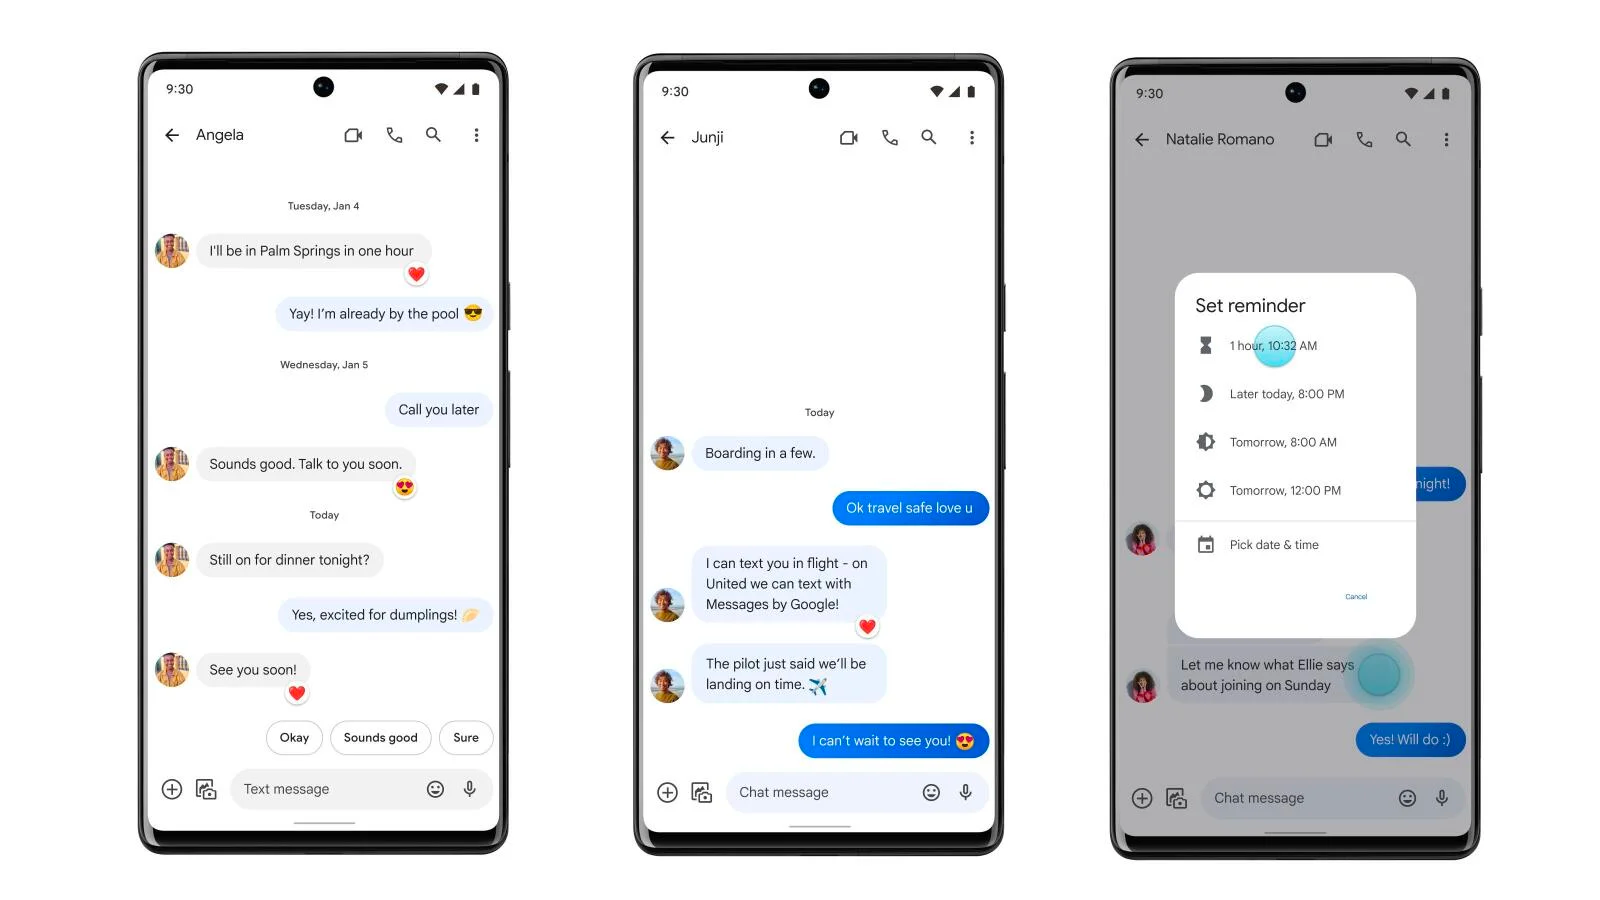 Google Messages messaging platform